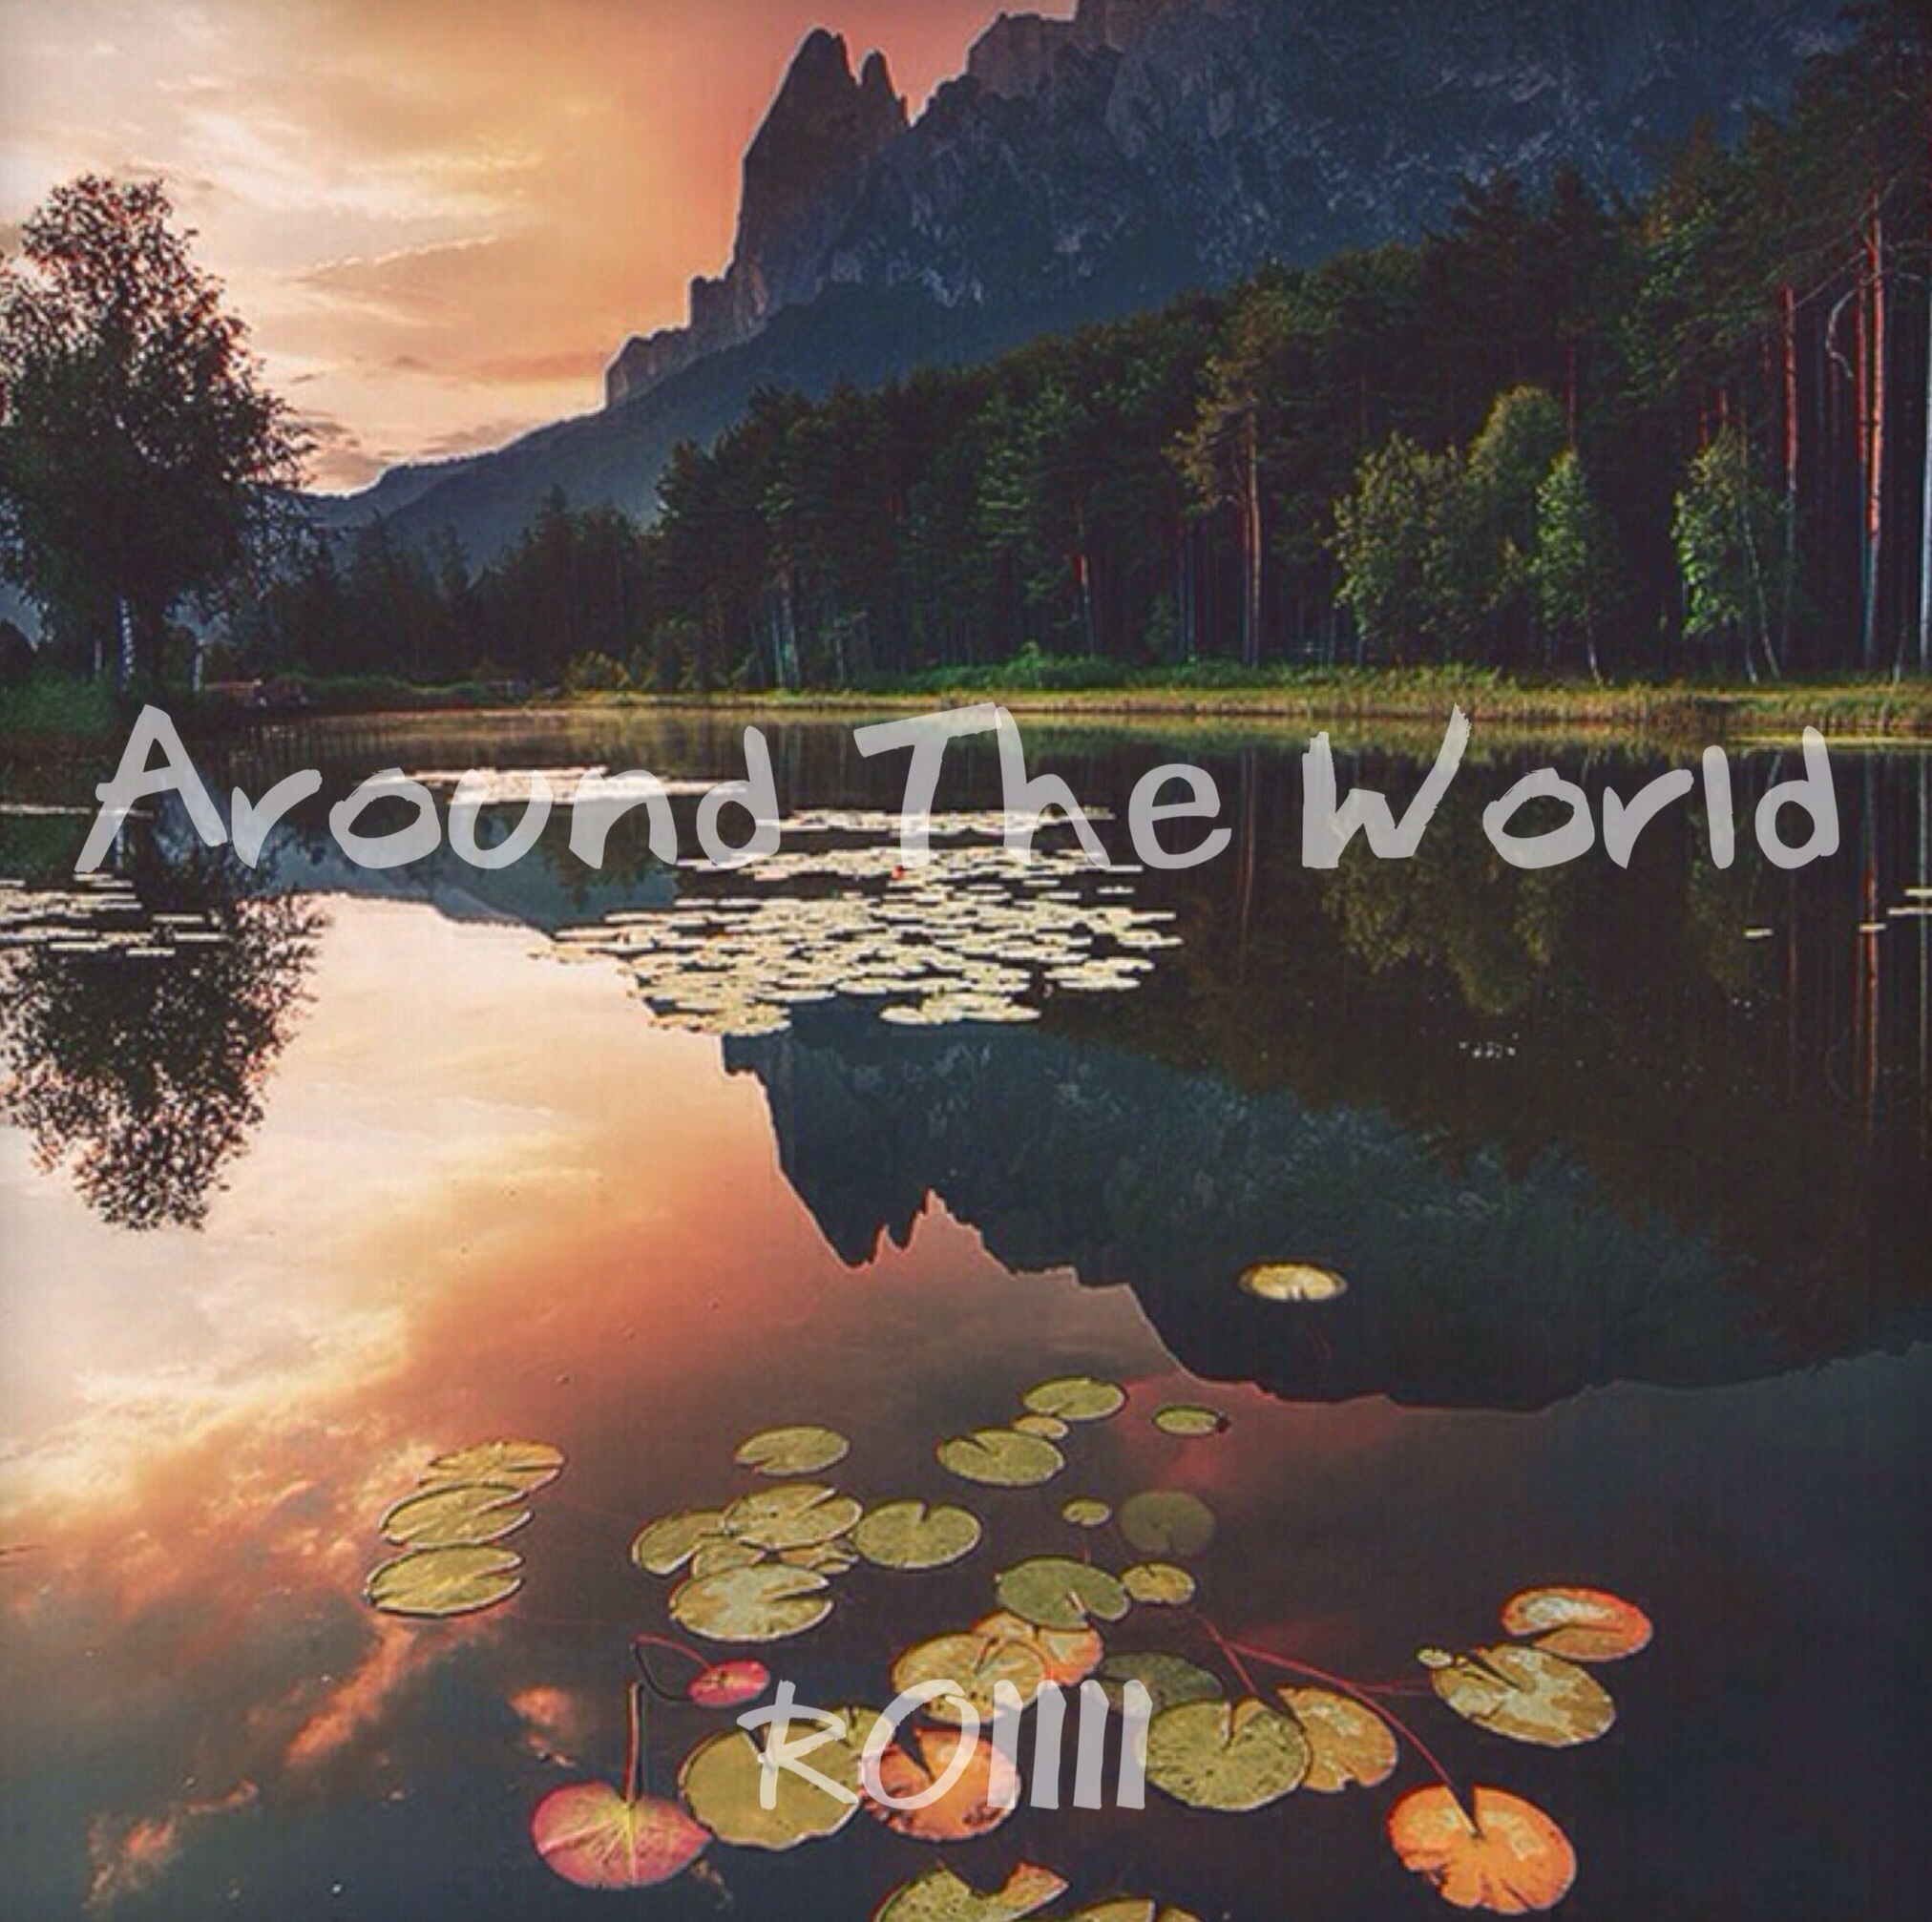 Around the World ROIIII Remix